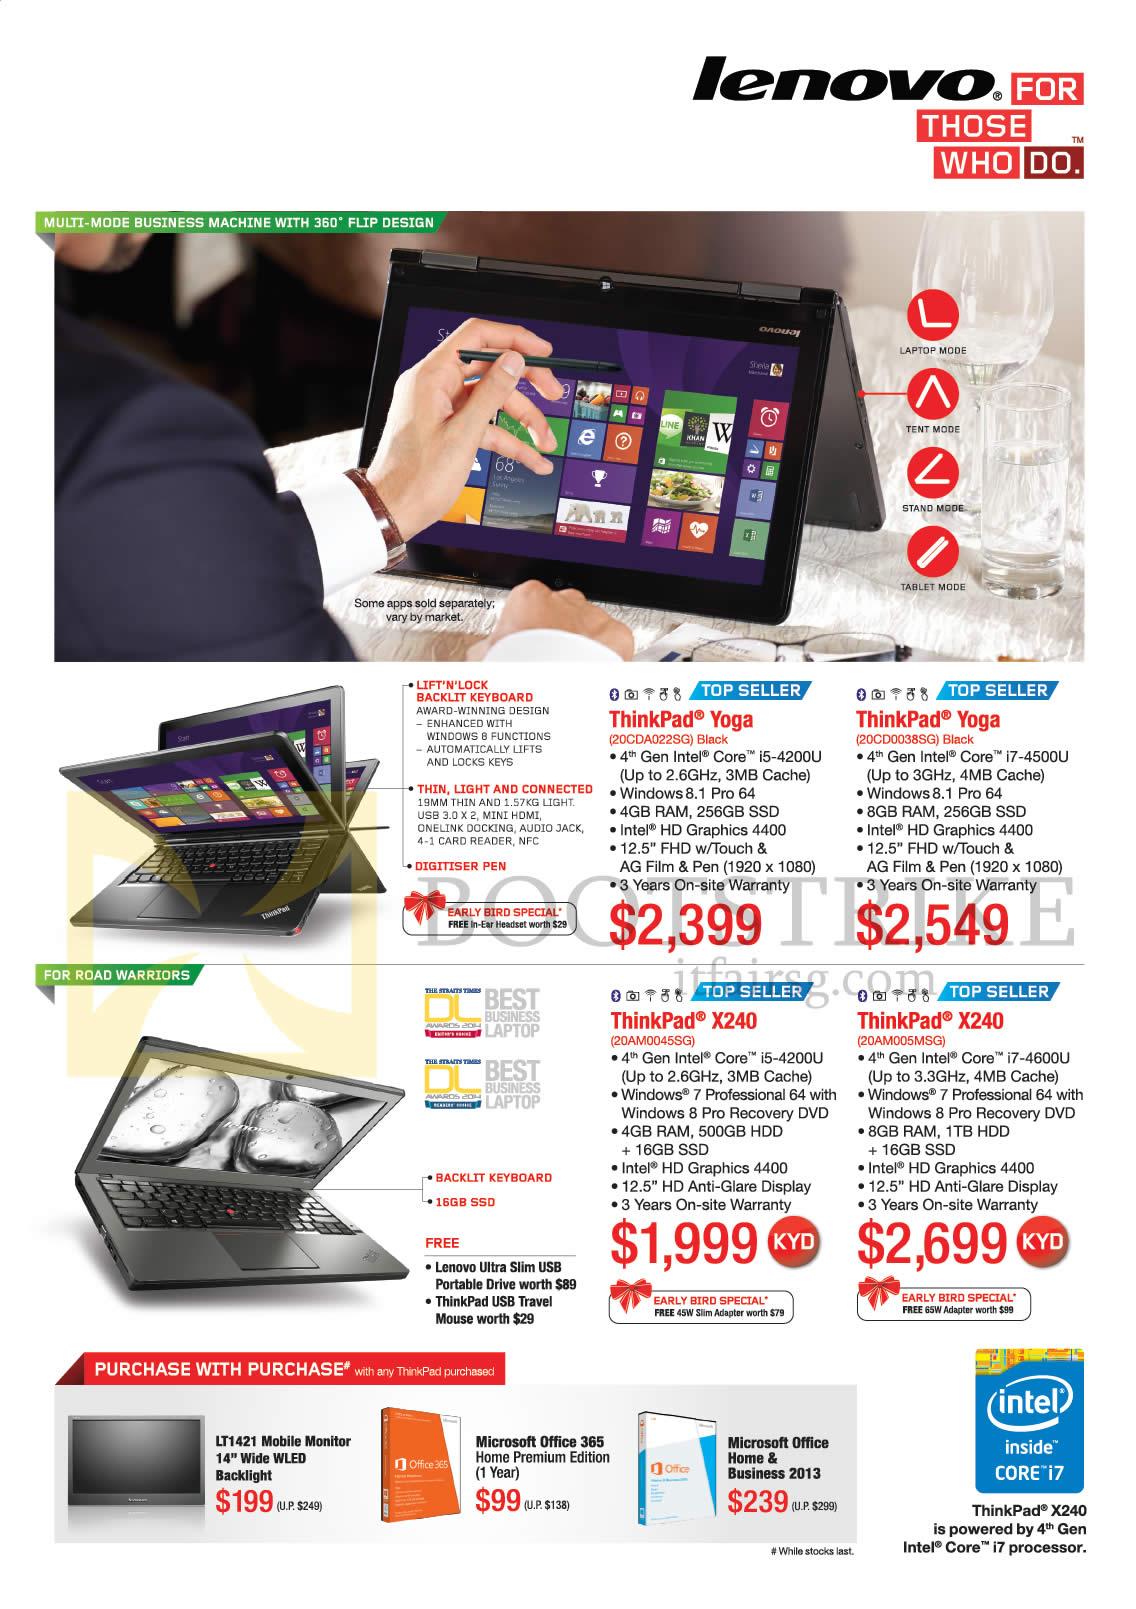 IT SHOW 2014 price list image brochure of Lenovo Notebooks ThinkPad Yoga 20CDA022SG, 20CD0038SG, ThinkPad X240 20AM0045SG, 20AM005MSG